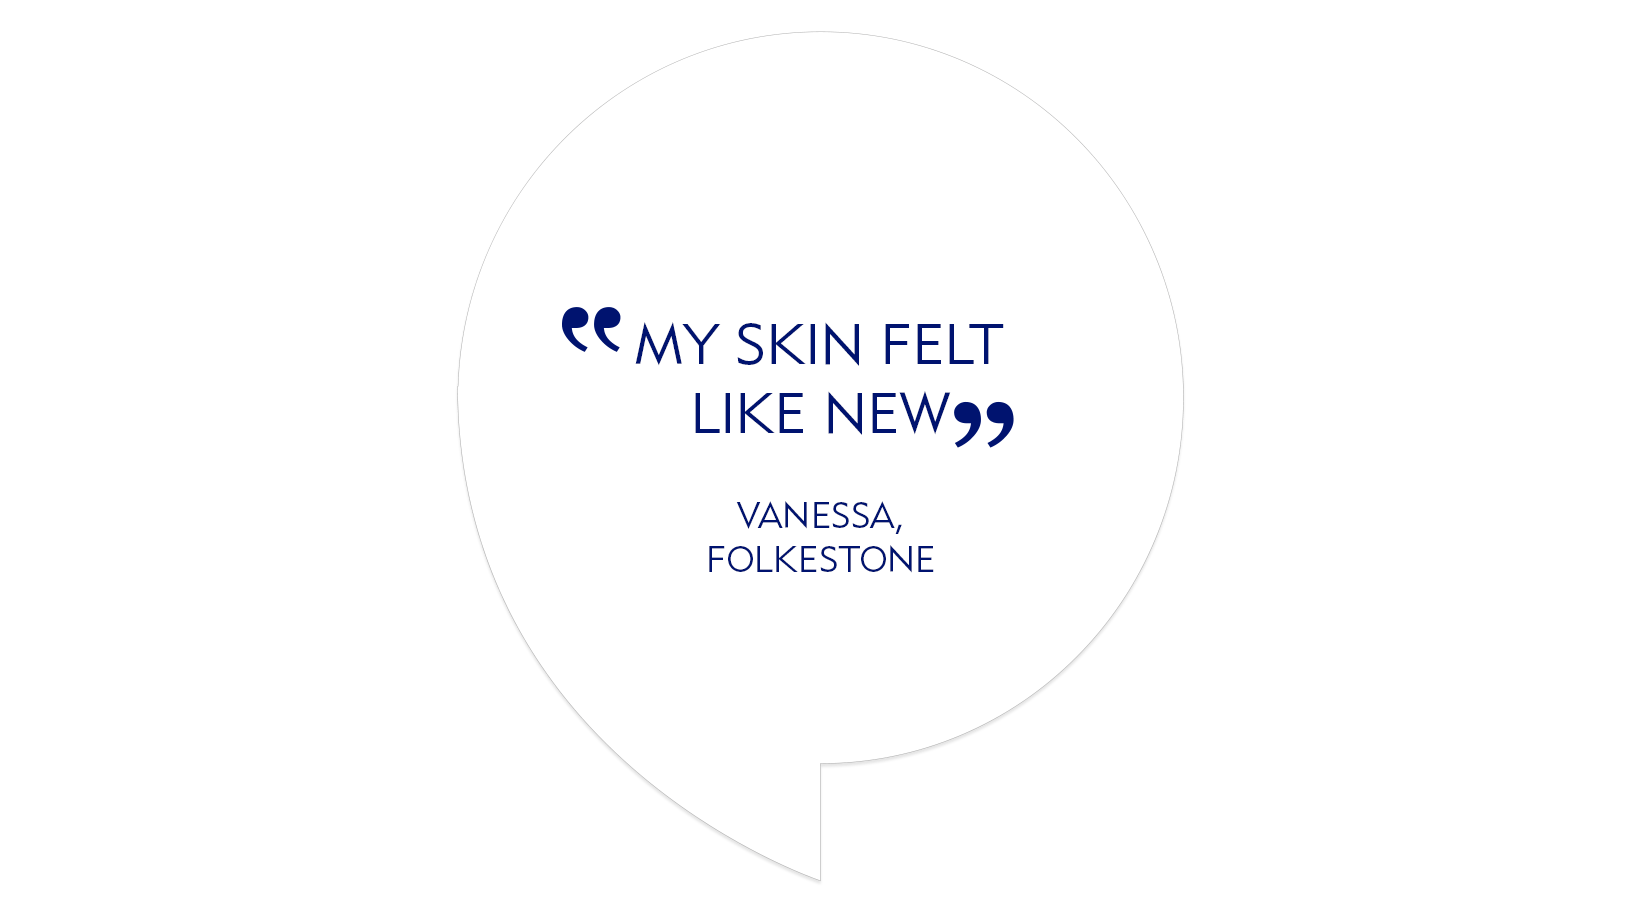 Testimonial quote "My skin felt like new"